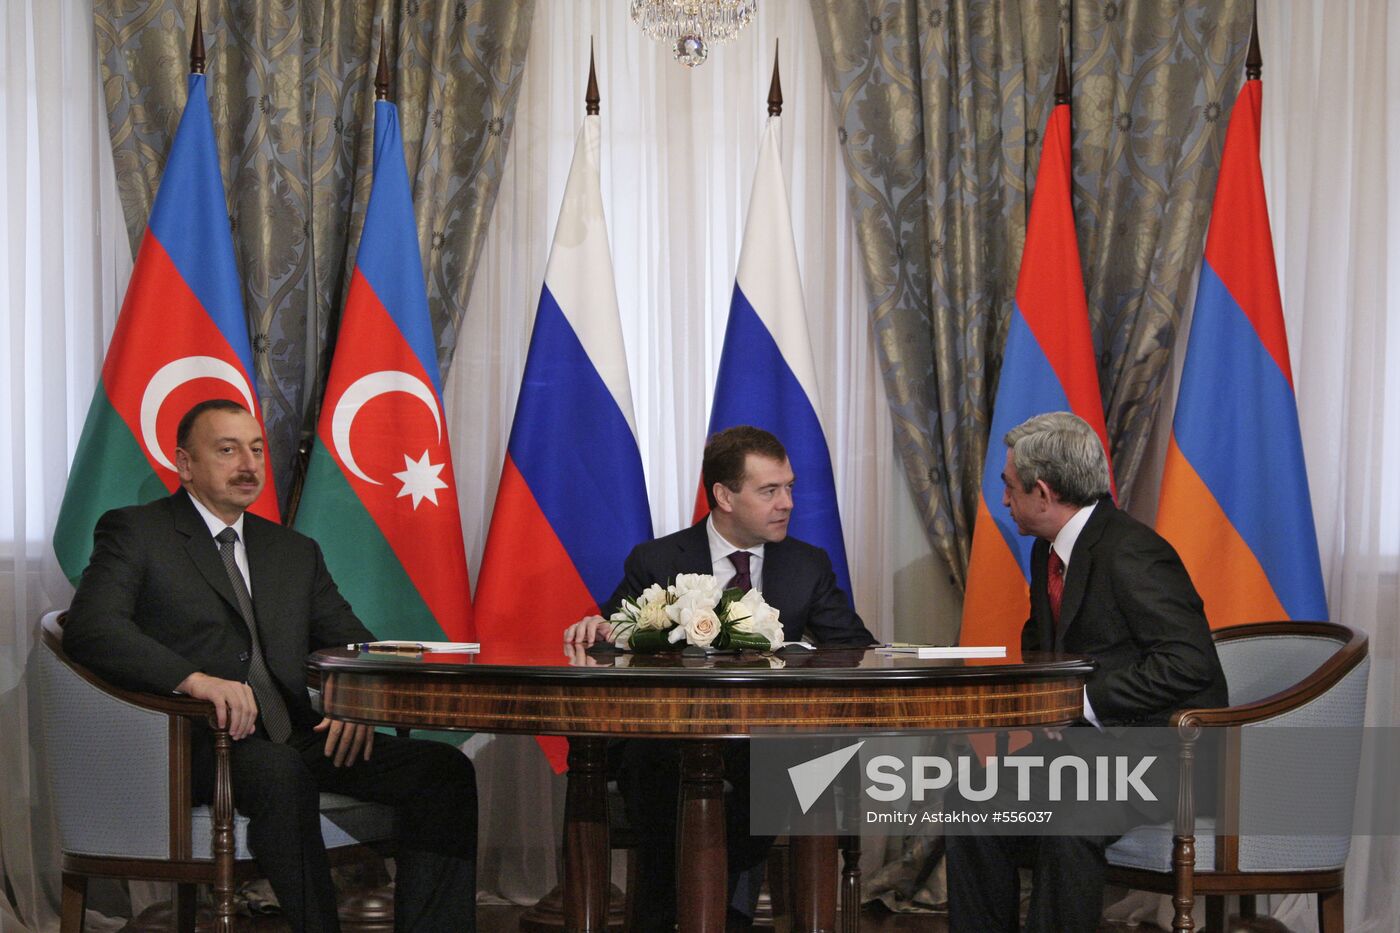 Dmitry Medvedev, Serzh Sargsyan and Ilham Aliev in Sochi